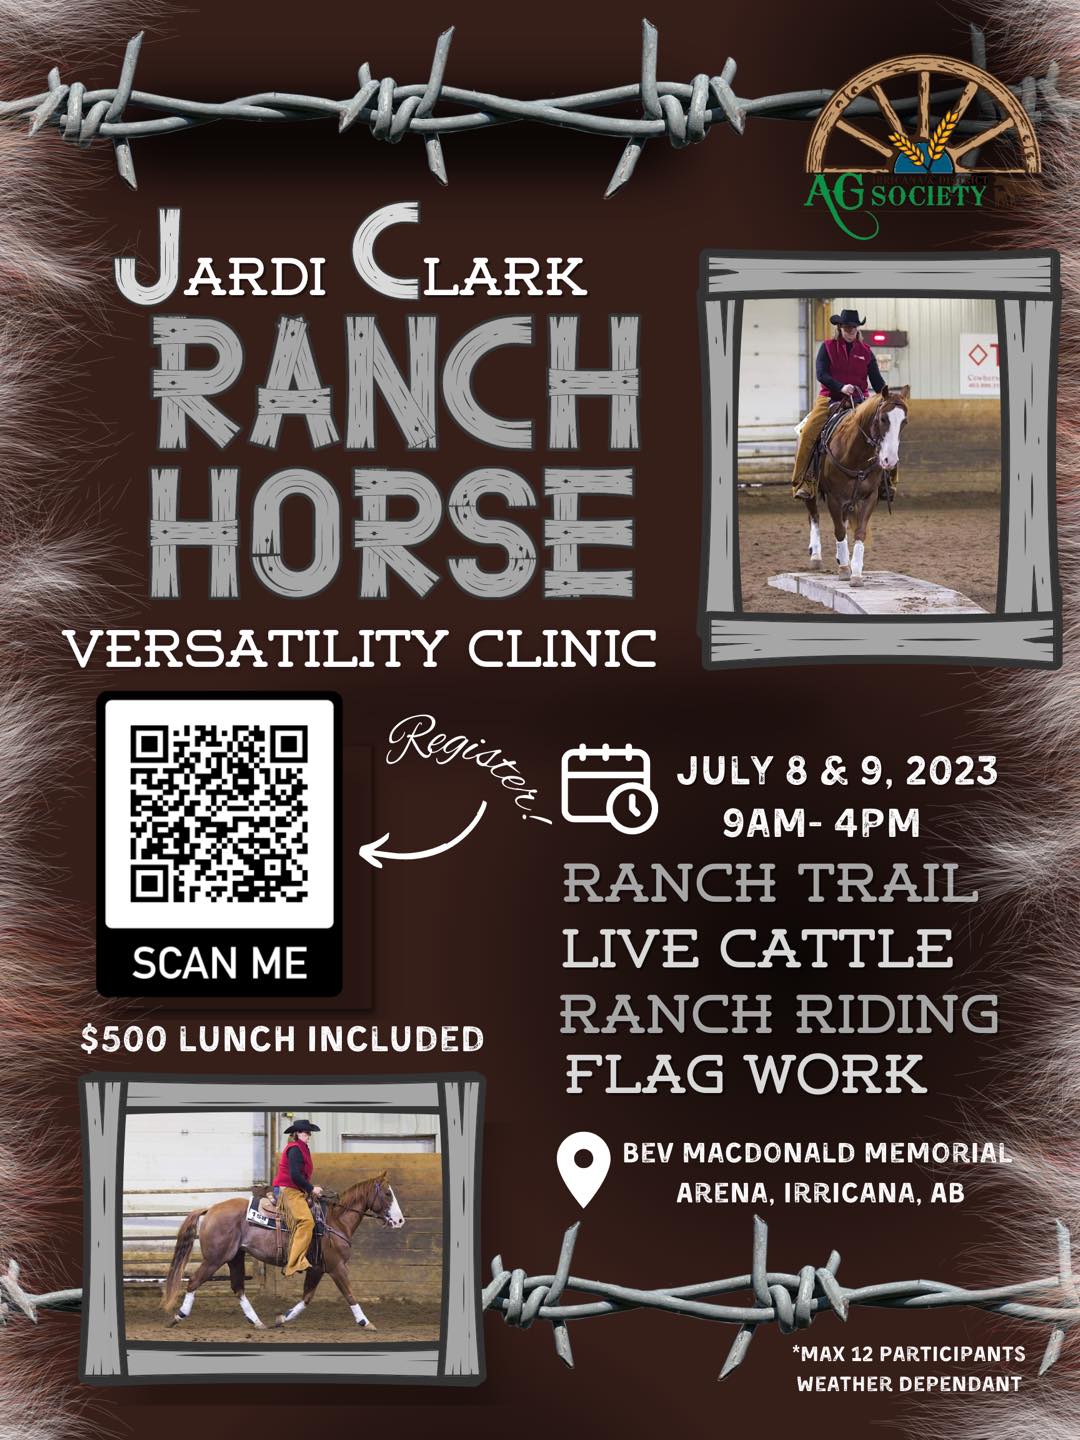 Irricana AG Society Ranch Horse Versatility Clinic